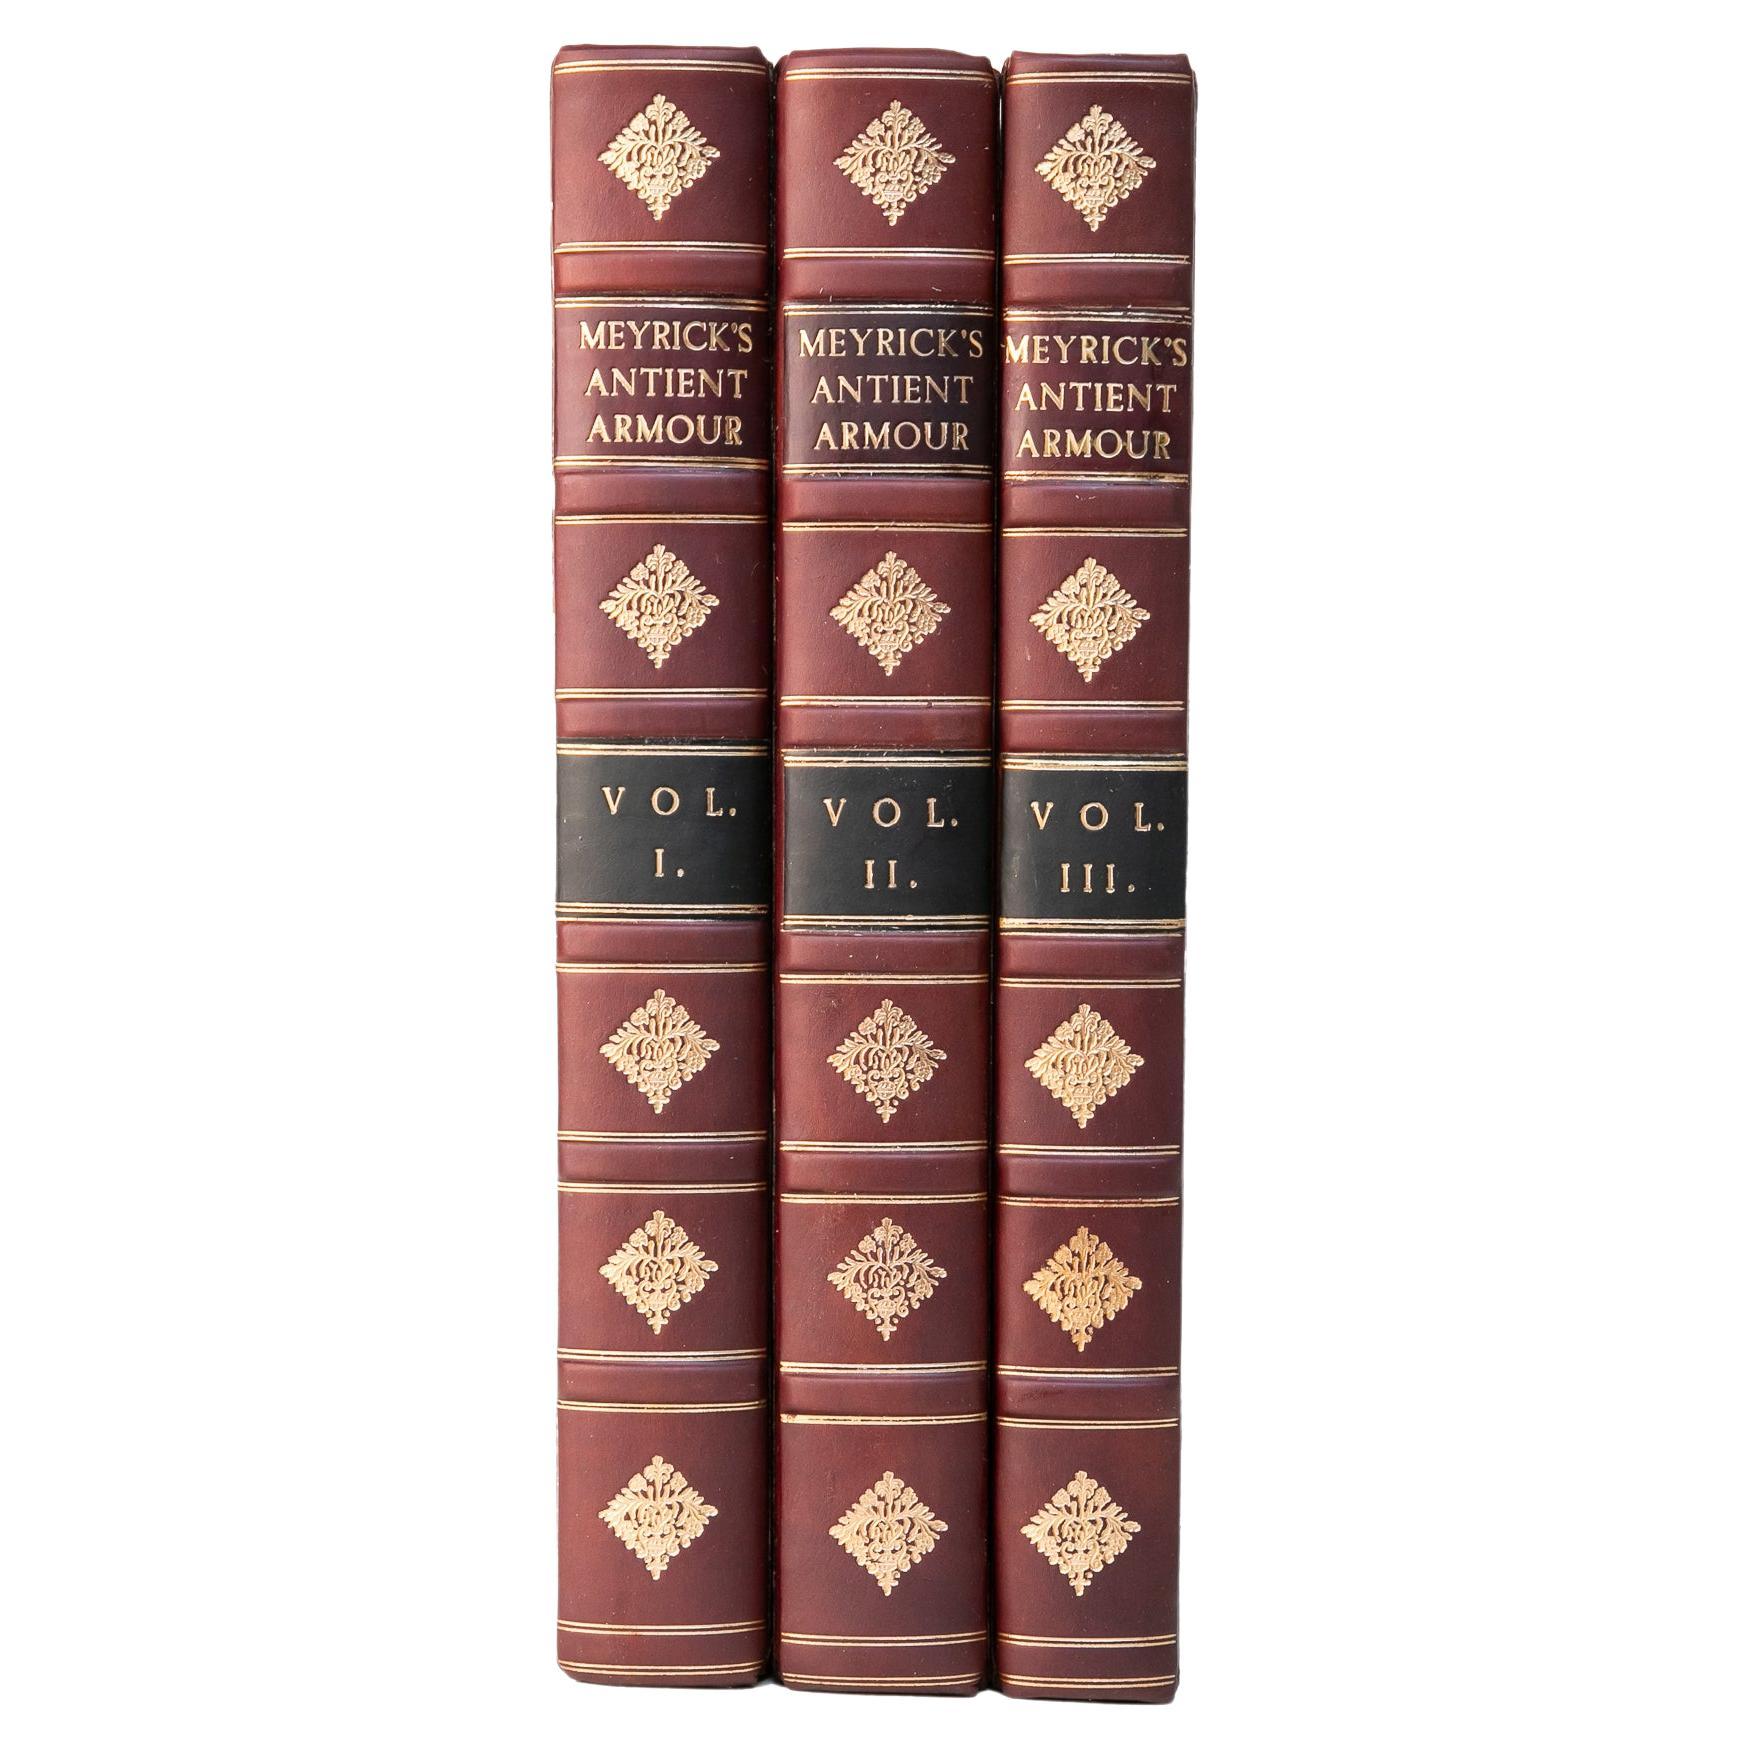 3 Volumes. Samuel Rush Meyrick, Ancient Armour.